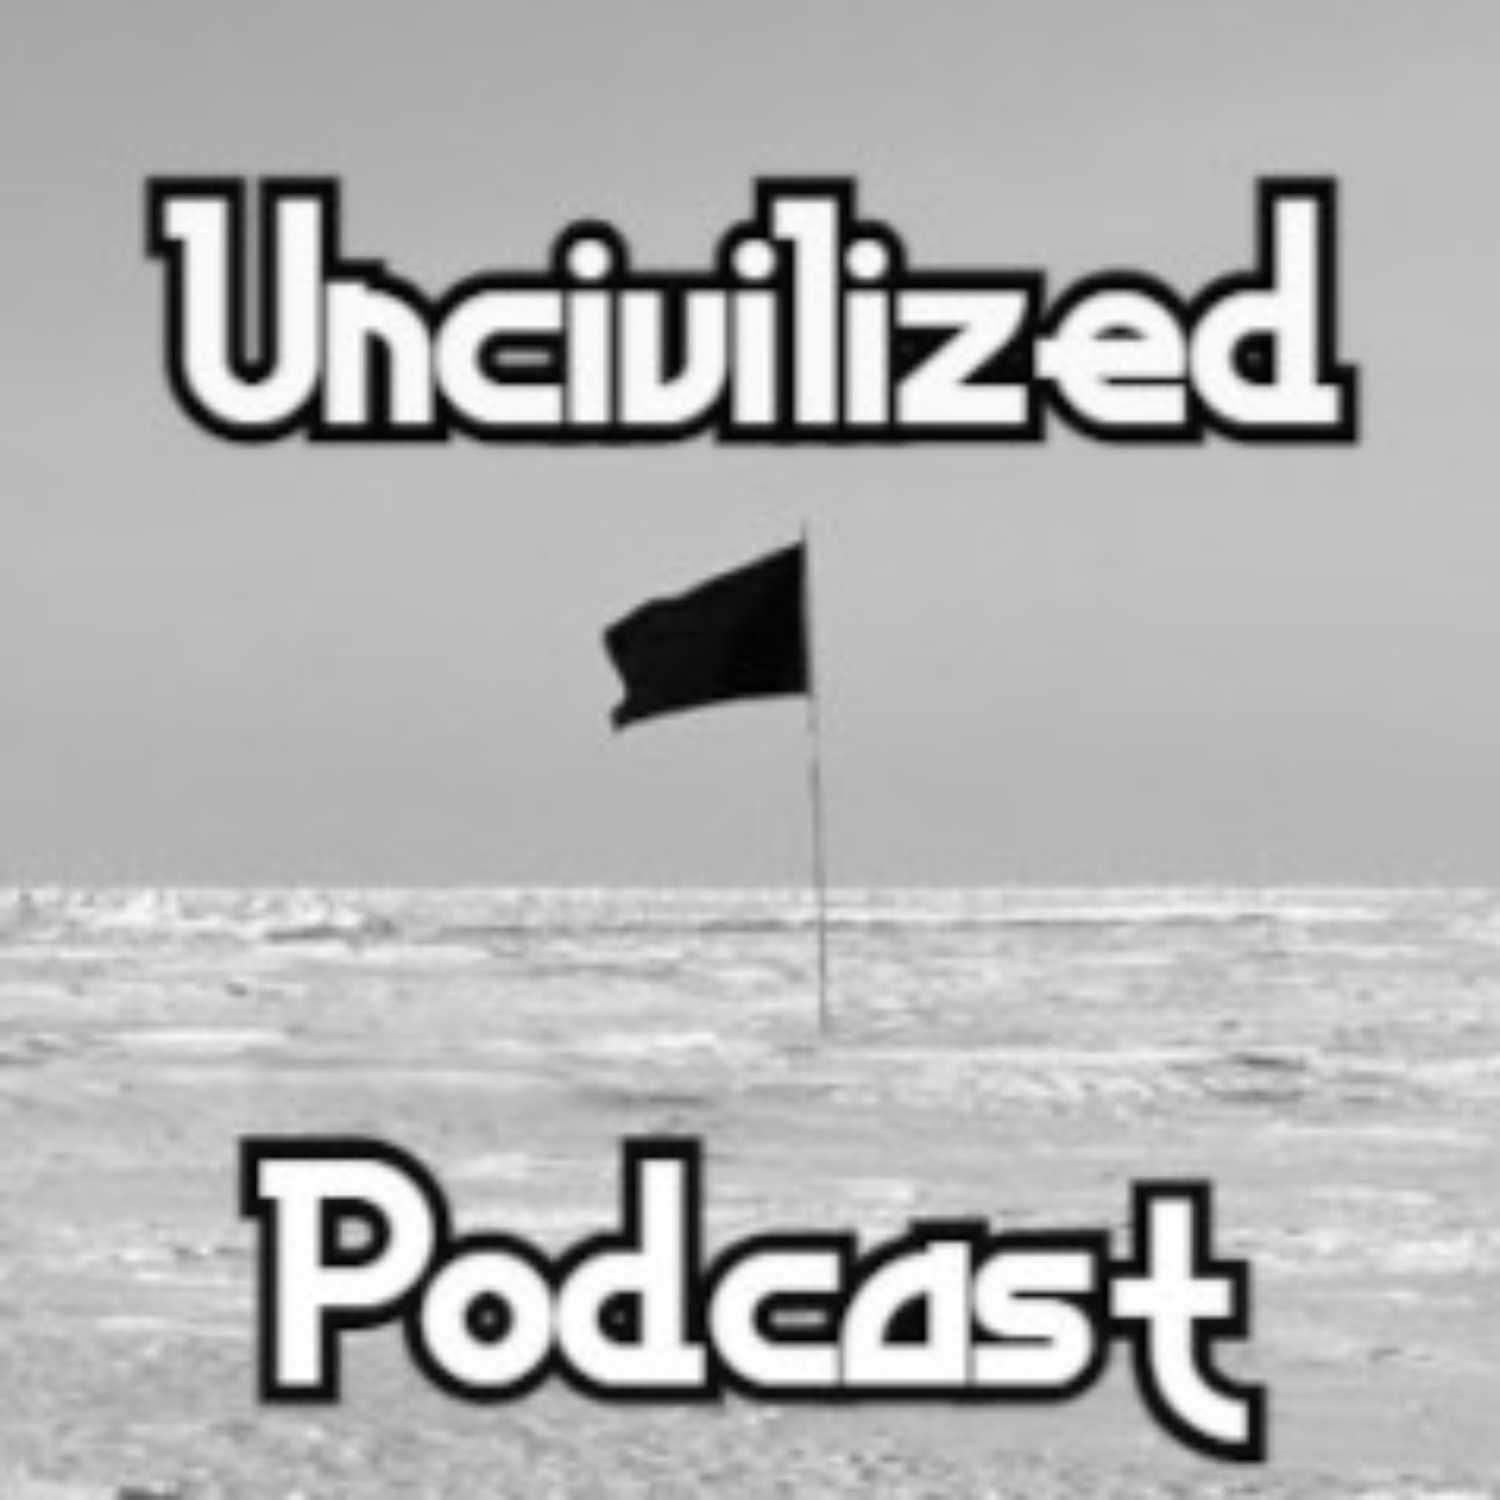 Uncivilized Podcast